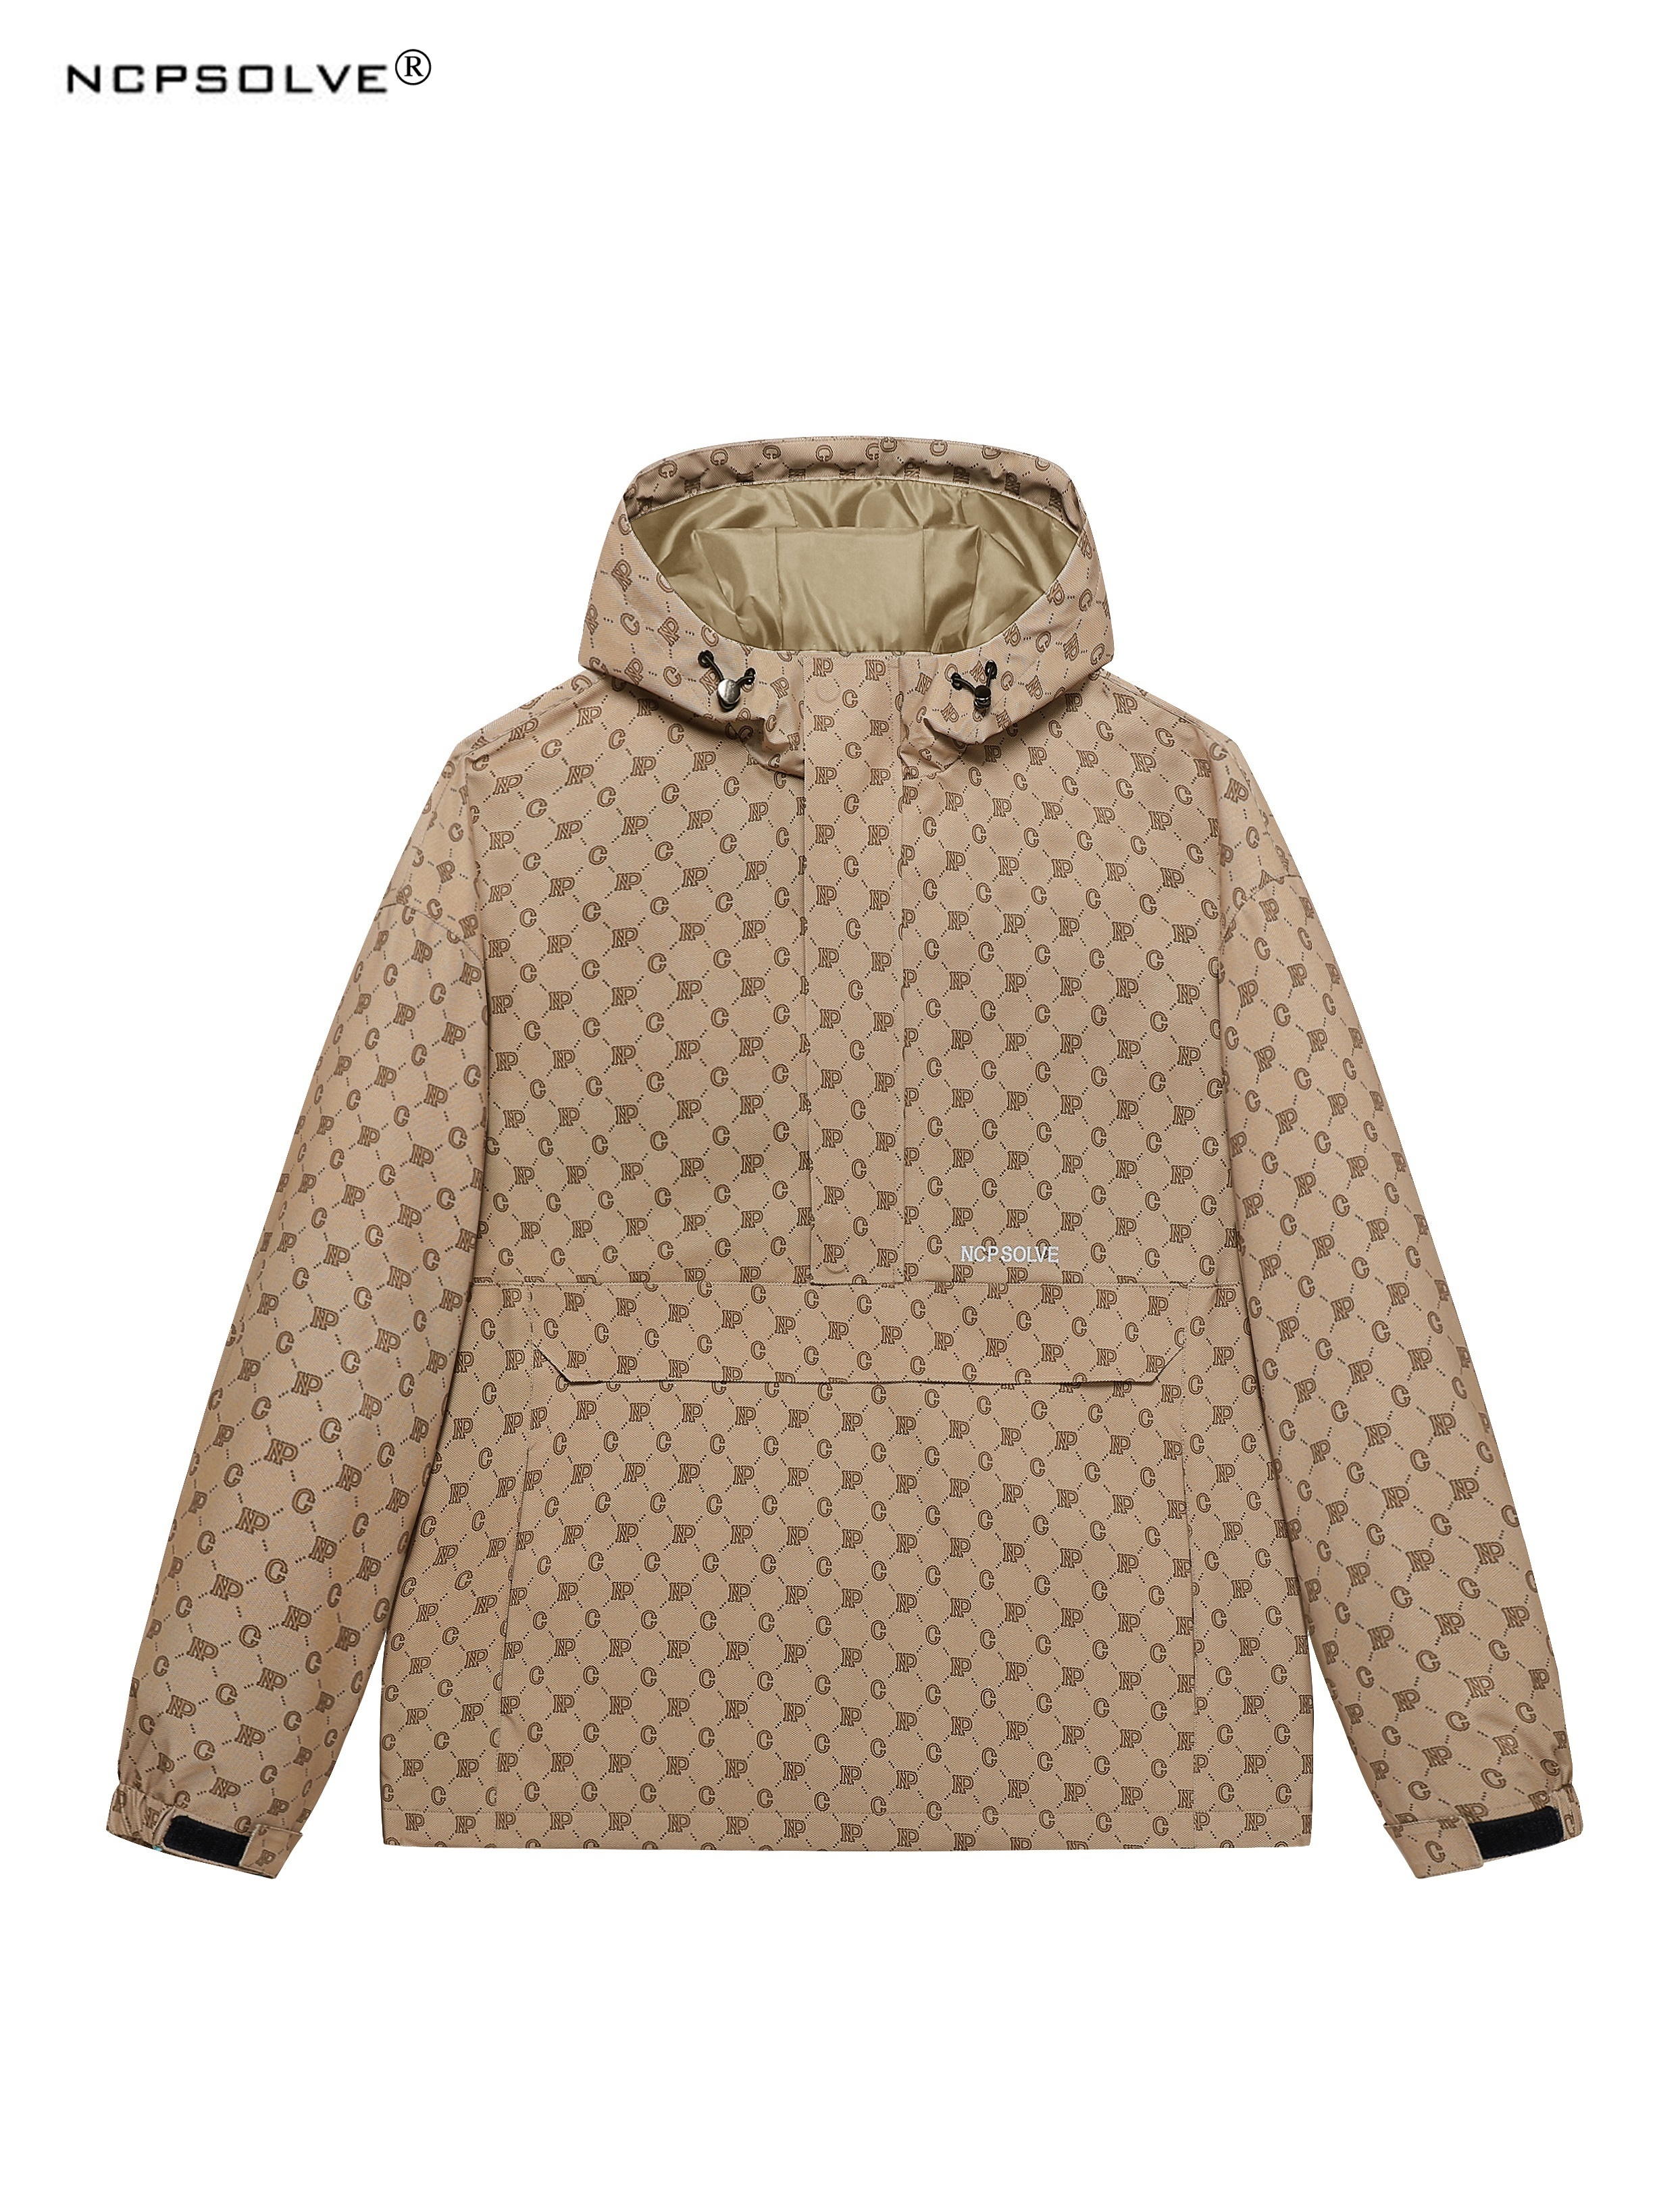 Louis Vuitton men's coat jacket waterproof size M